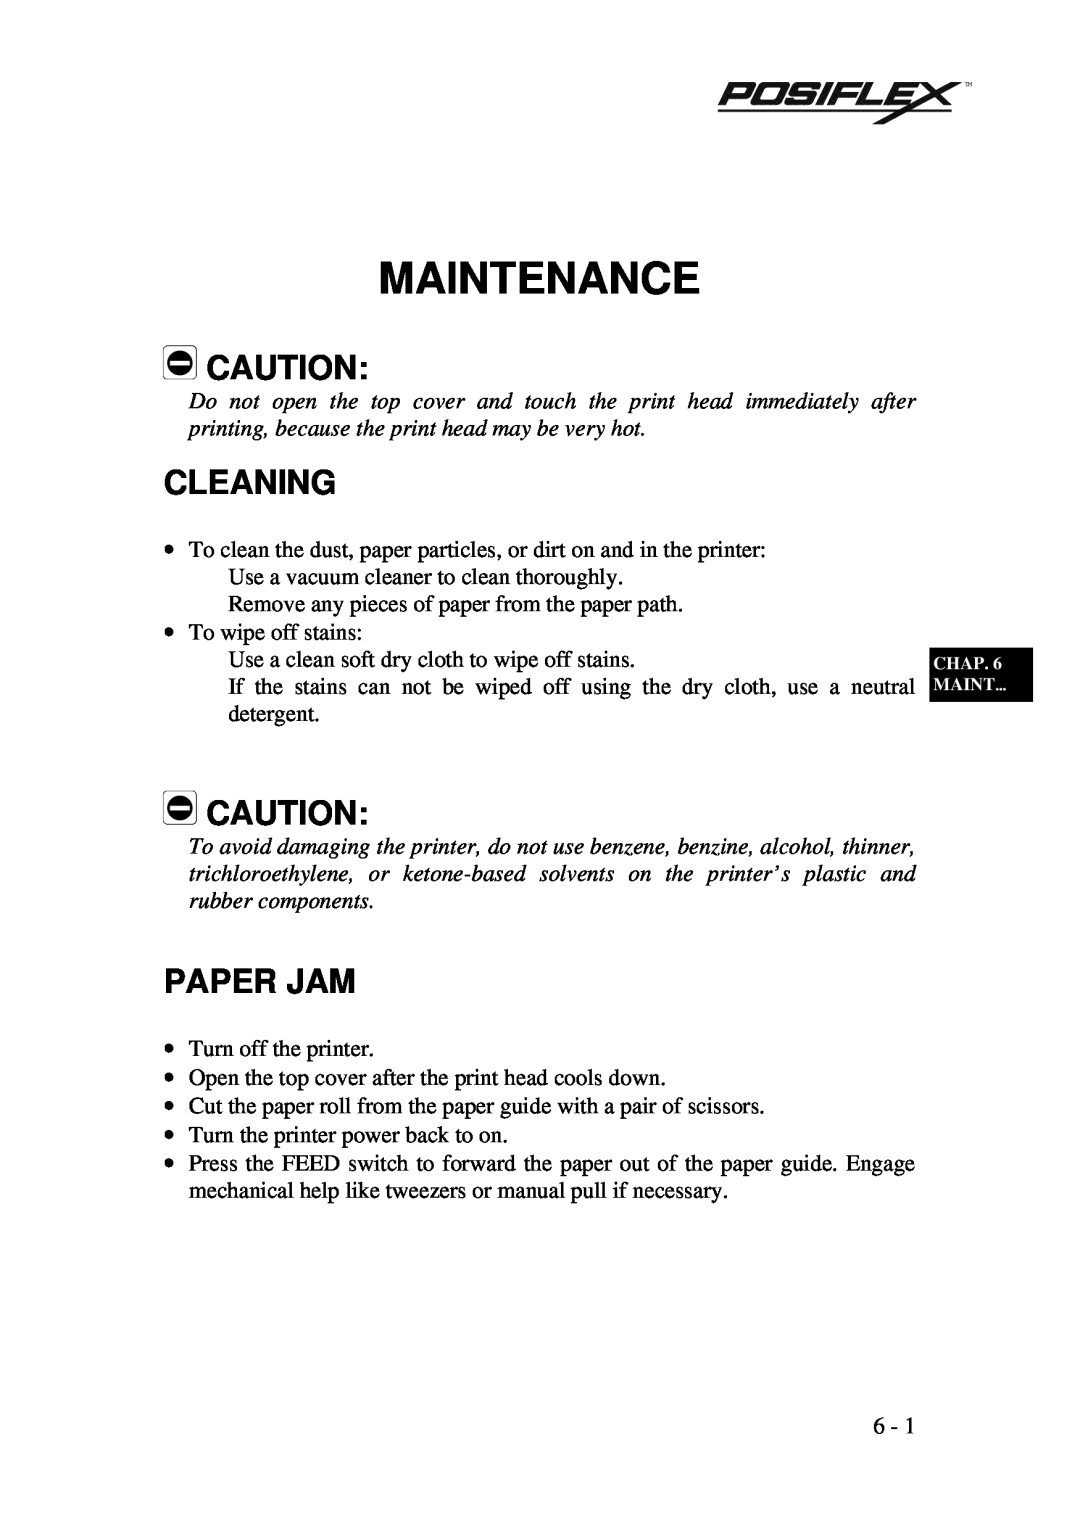 POSIFLEX Business Machines PP3000 manual Maintenance, Cleaning, Paper Jam 